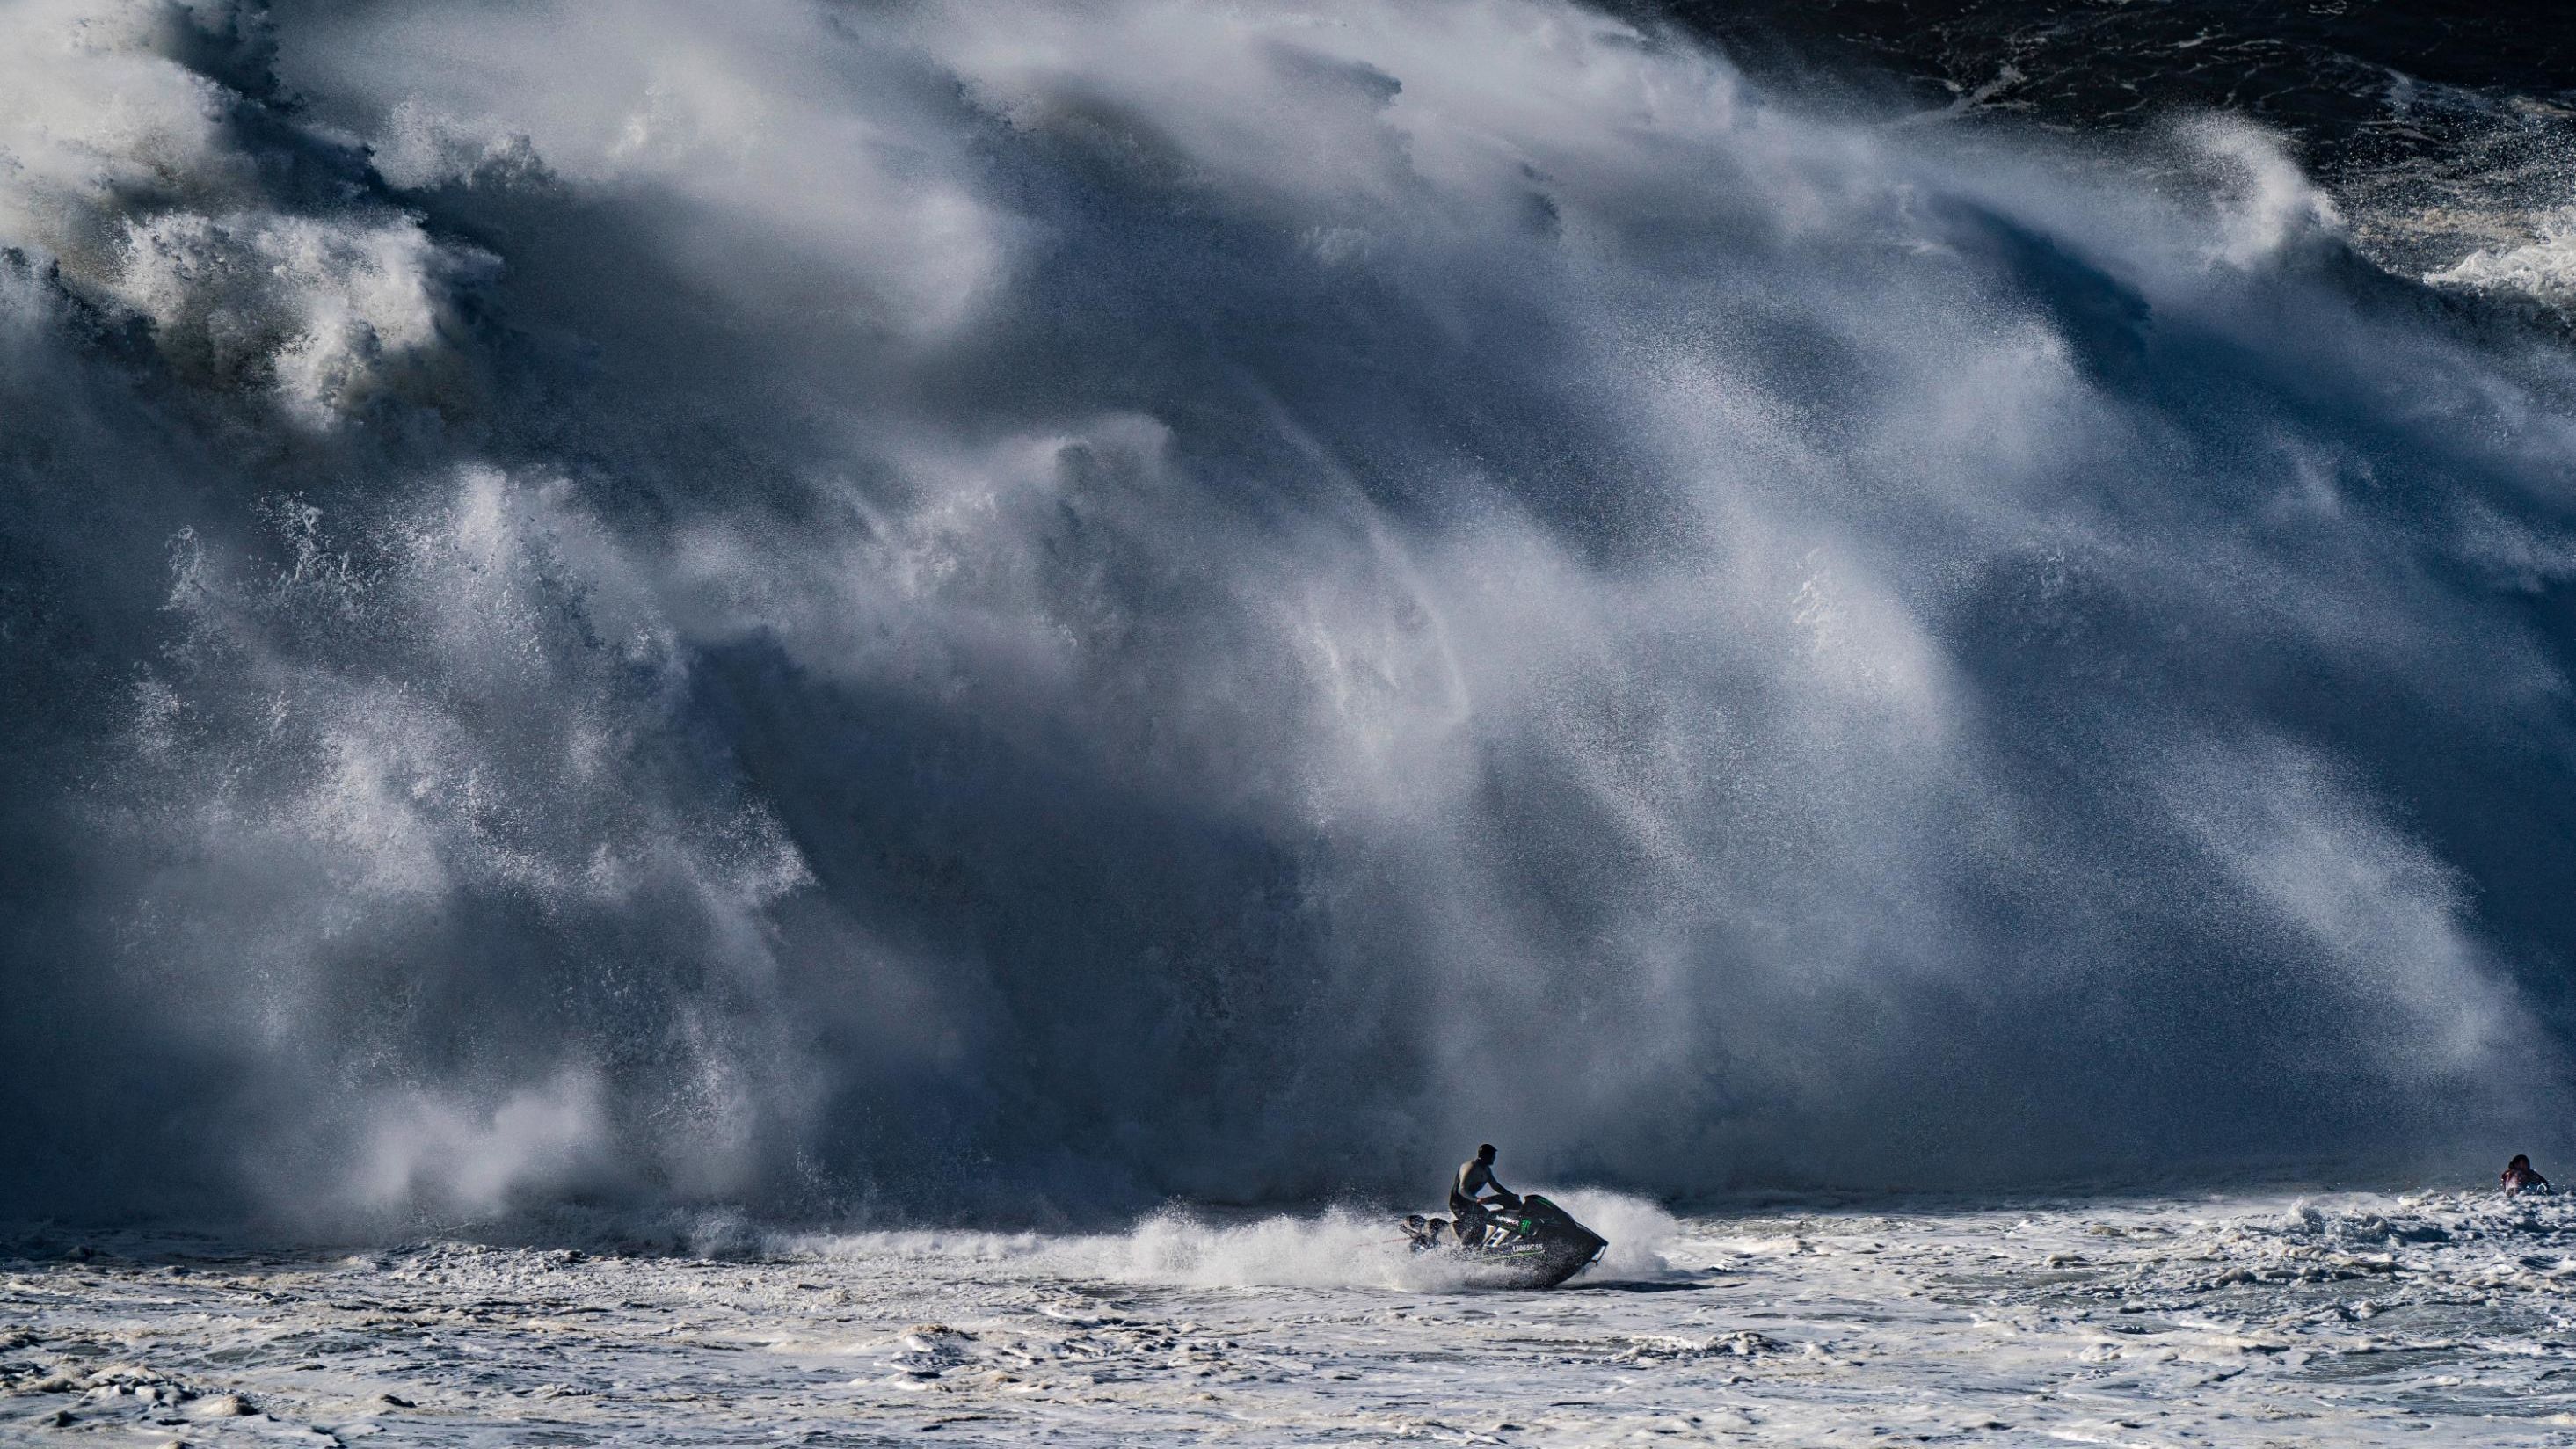 Big waves crash behind Nic von Rupp as he guides his jet ski to safety at Nazaré.